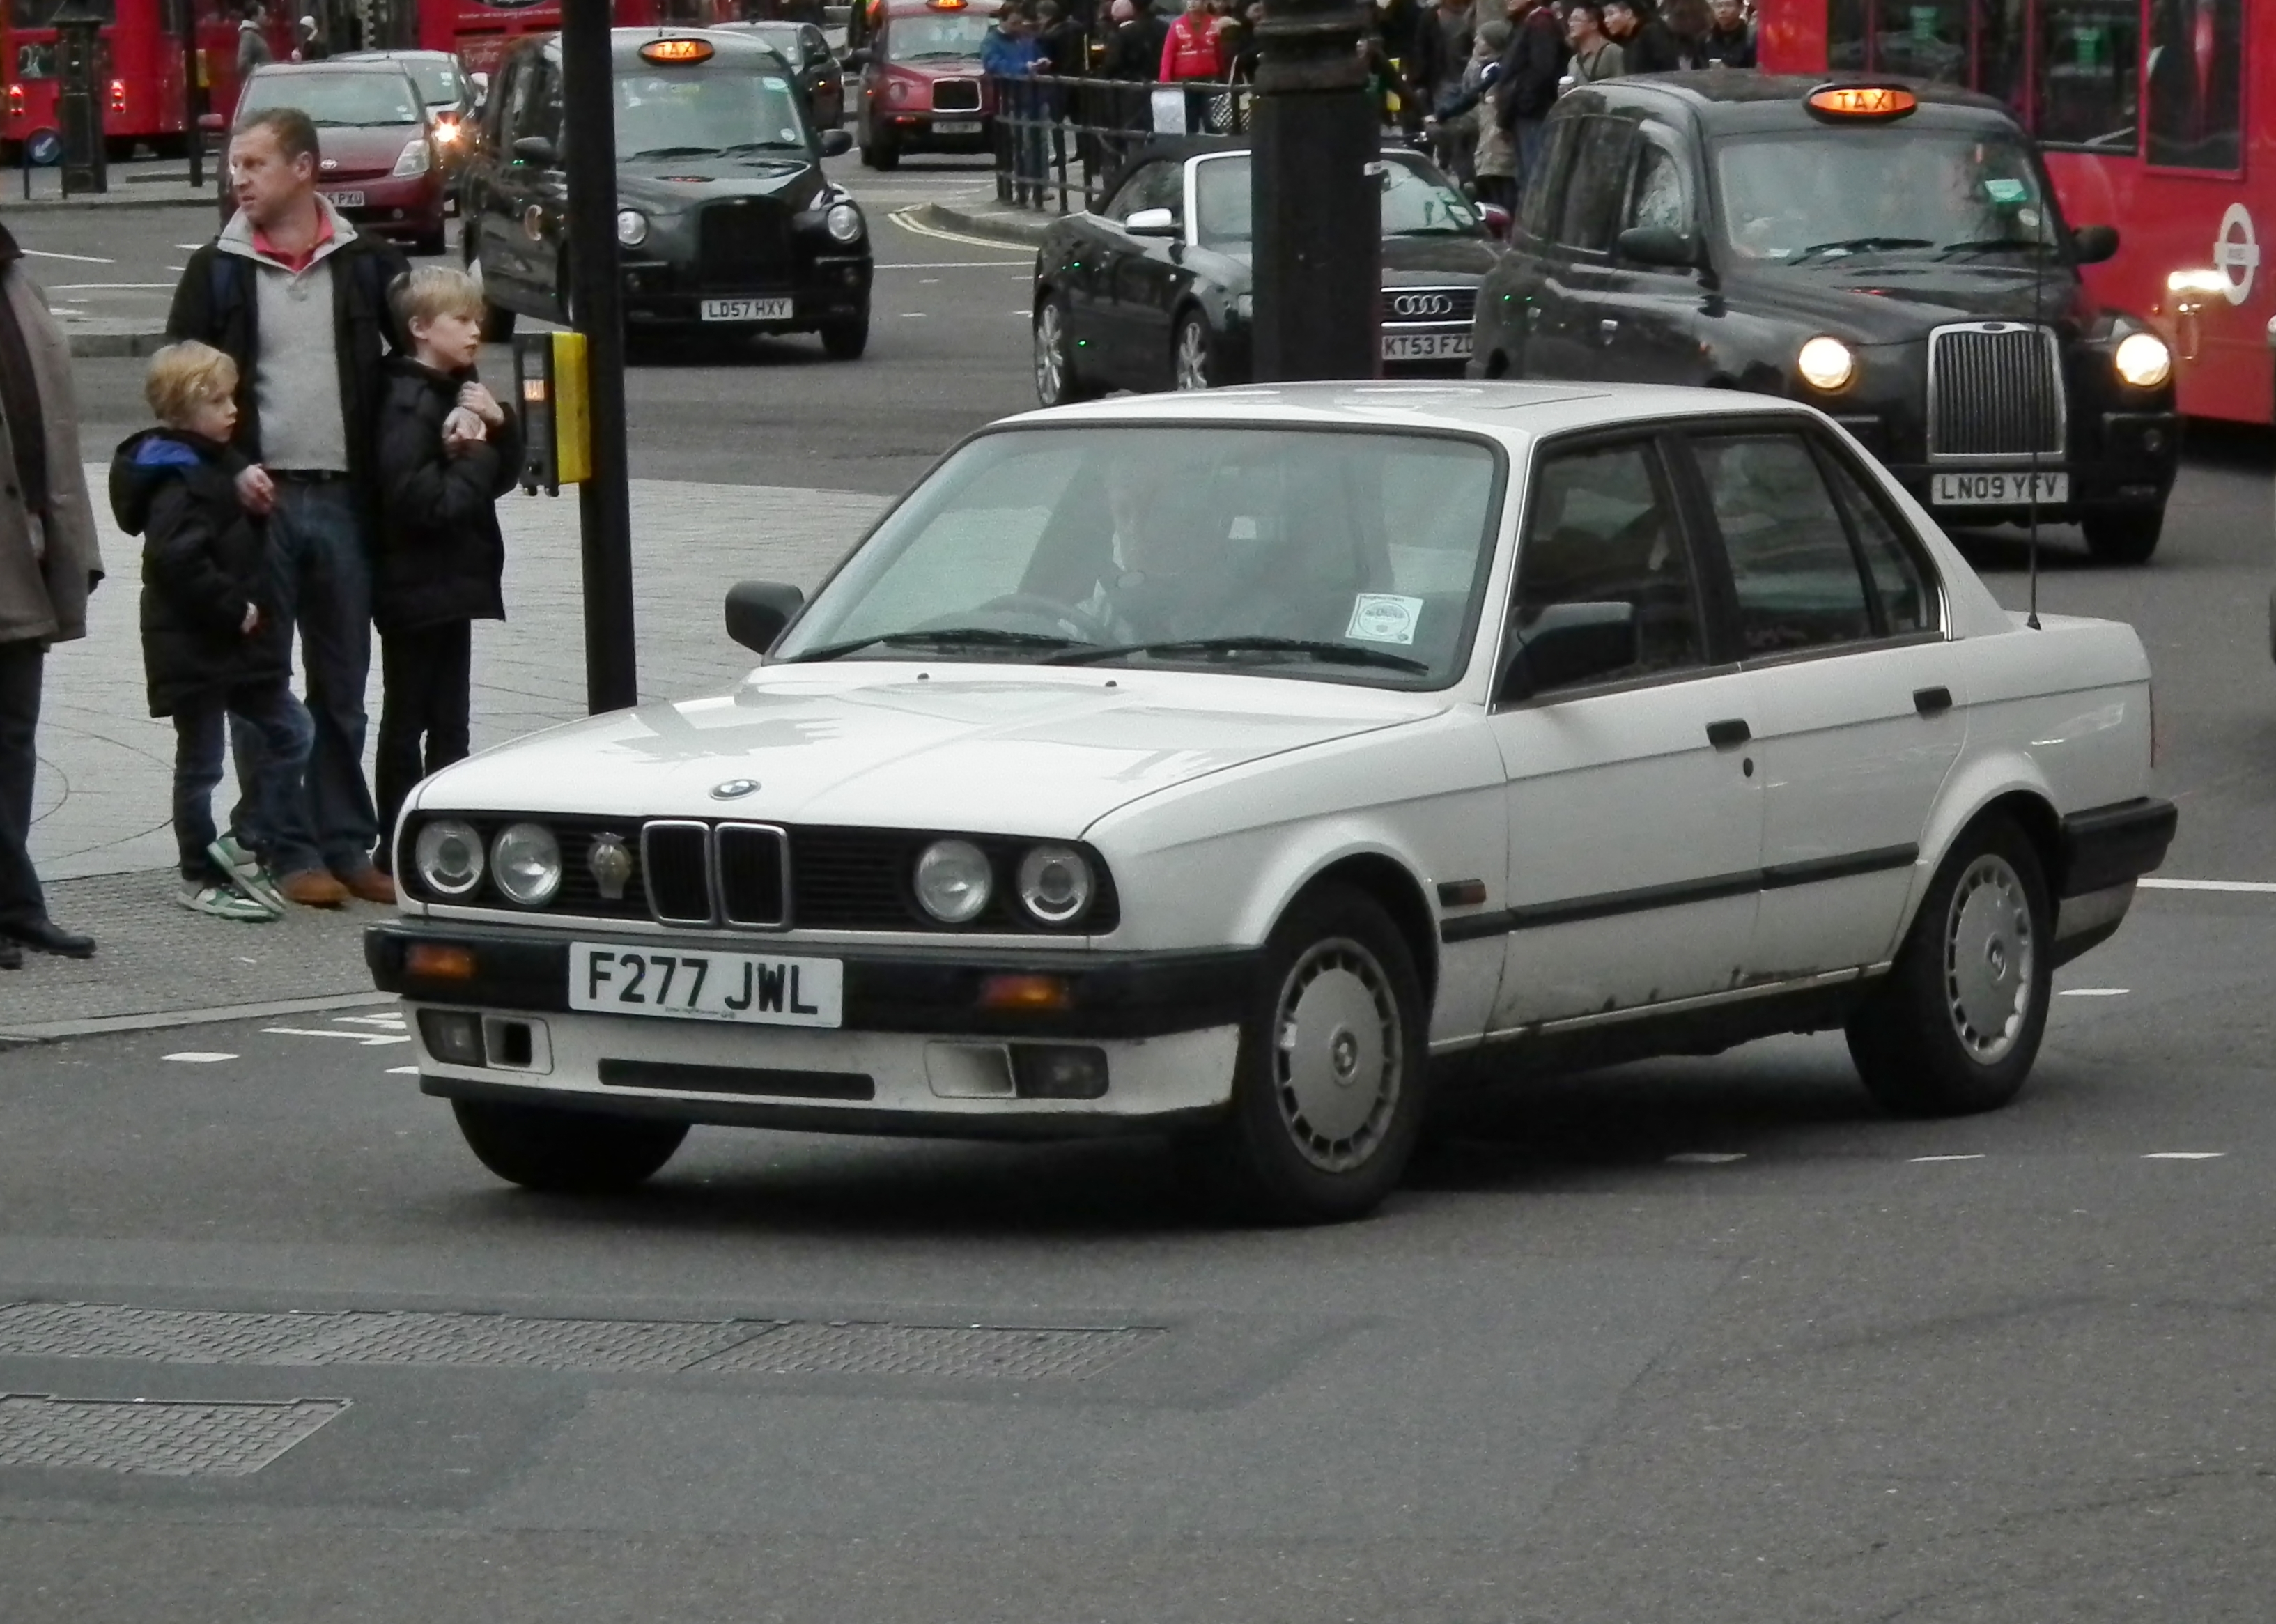 BMW 320i | Flickr - Photo Sharing!